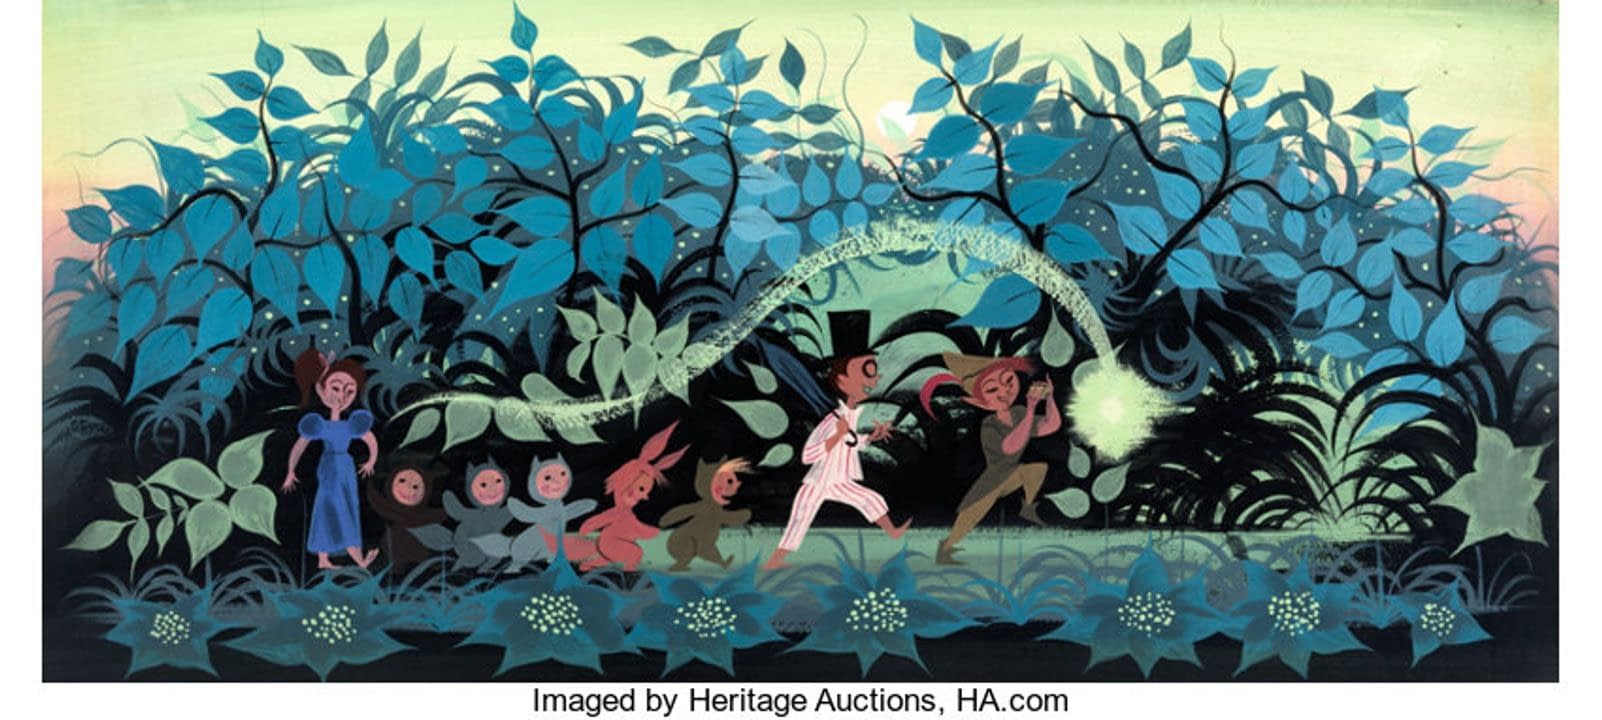 A Piece of Mary Blair's Original Peter Pan Artwork is up